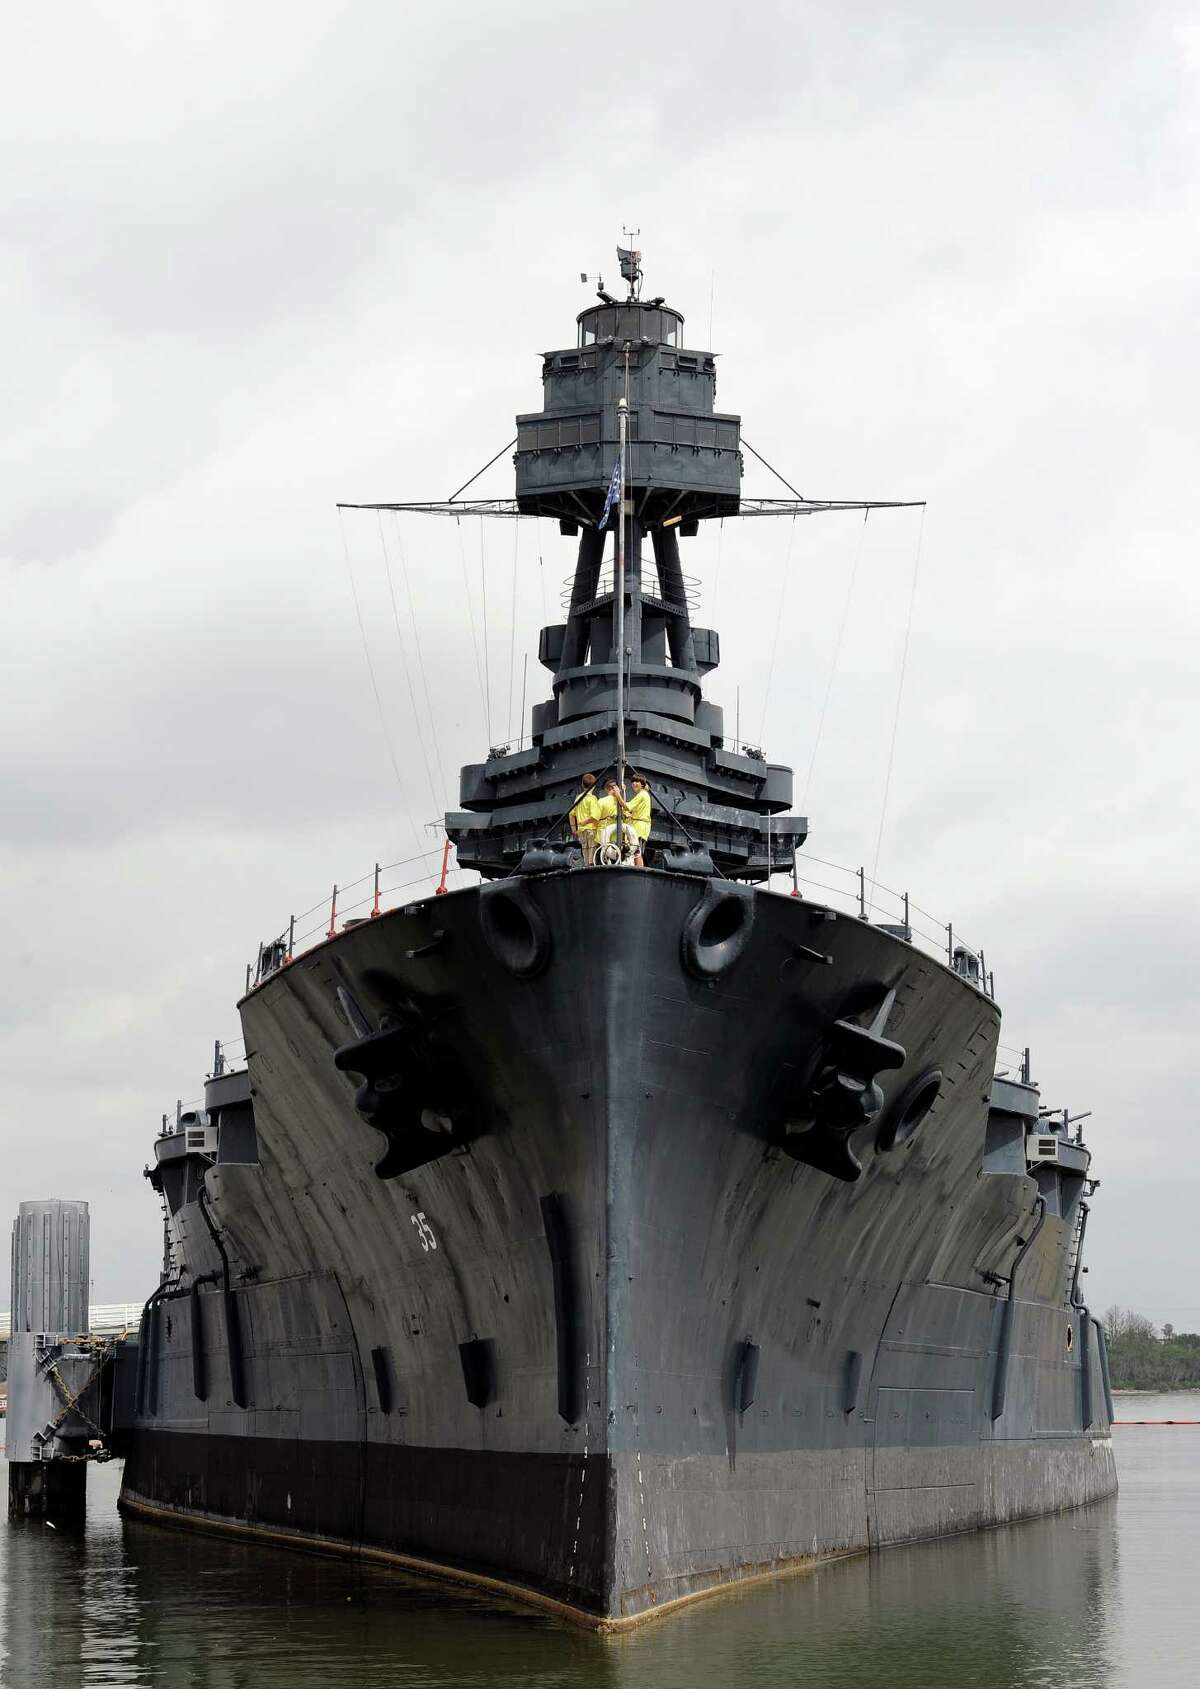 The USS Battleship Texas